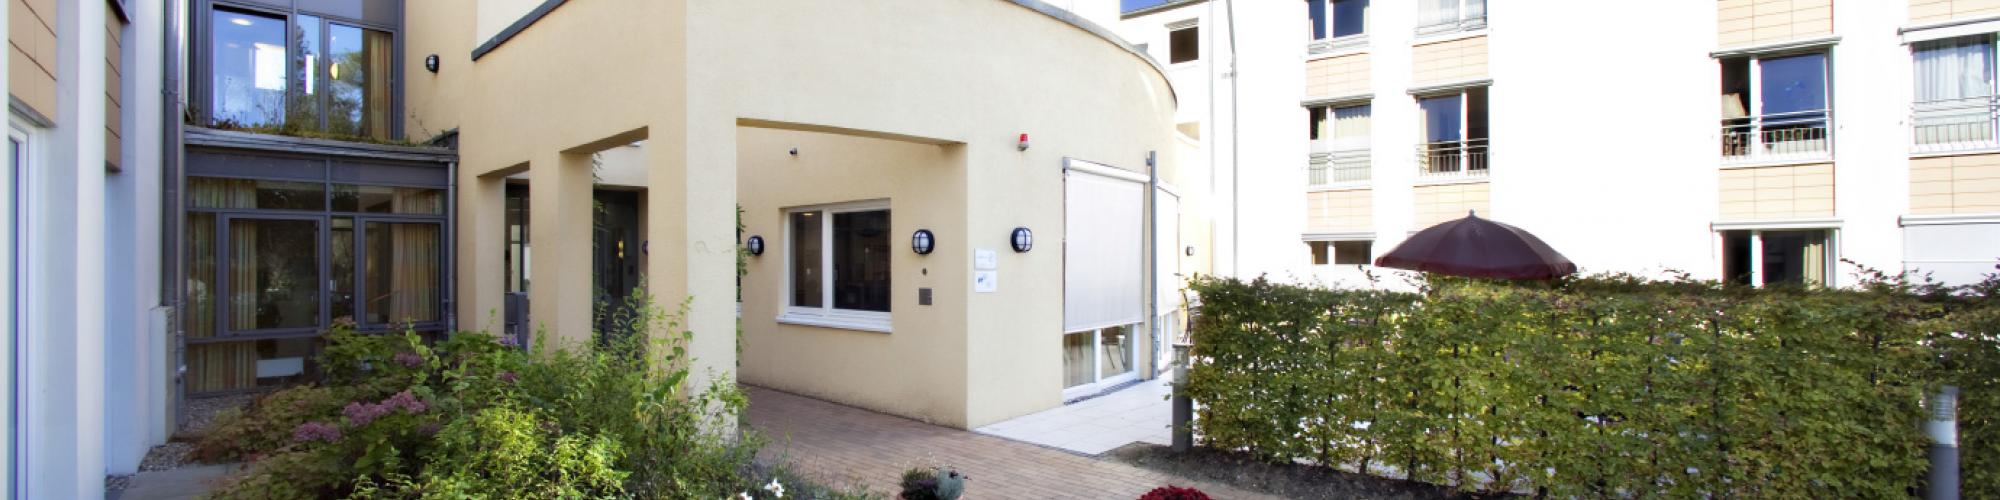 Alloheim Senioren-Residenzen - „Haus am Holunderbusch”